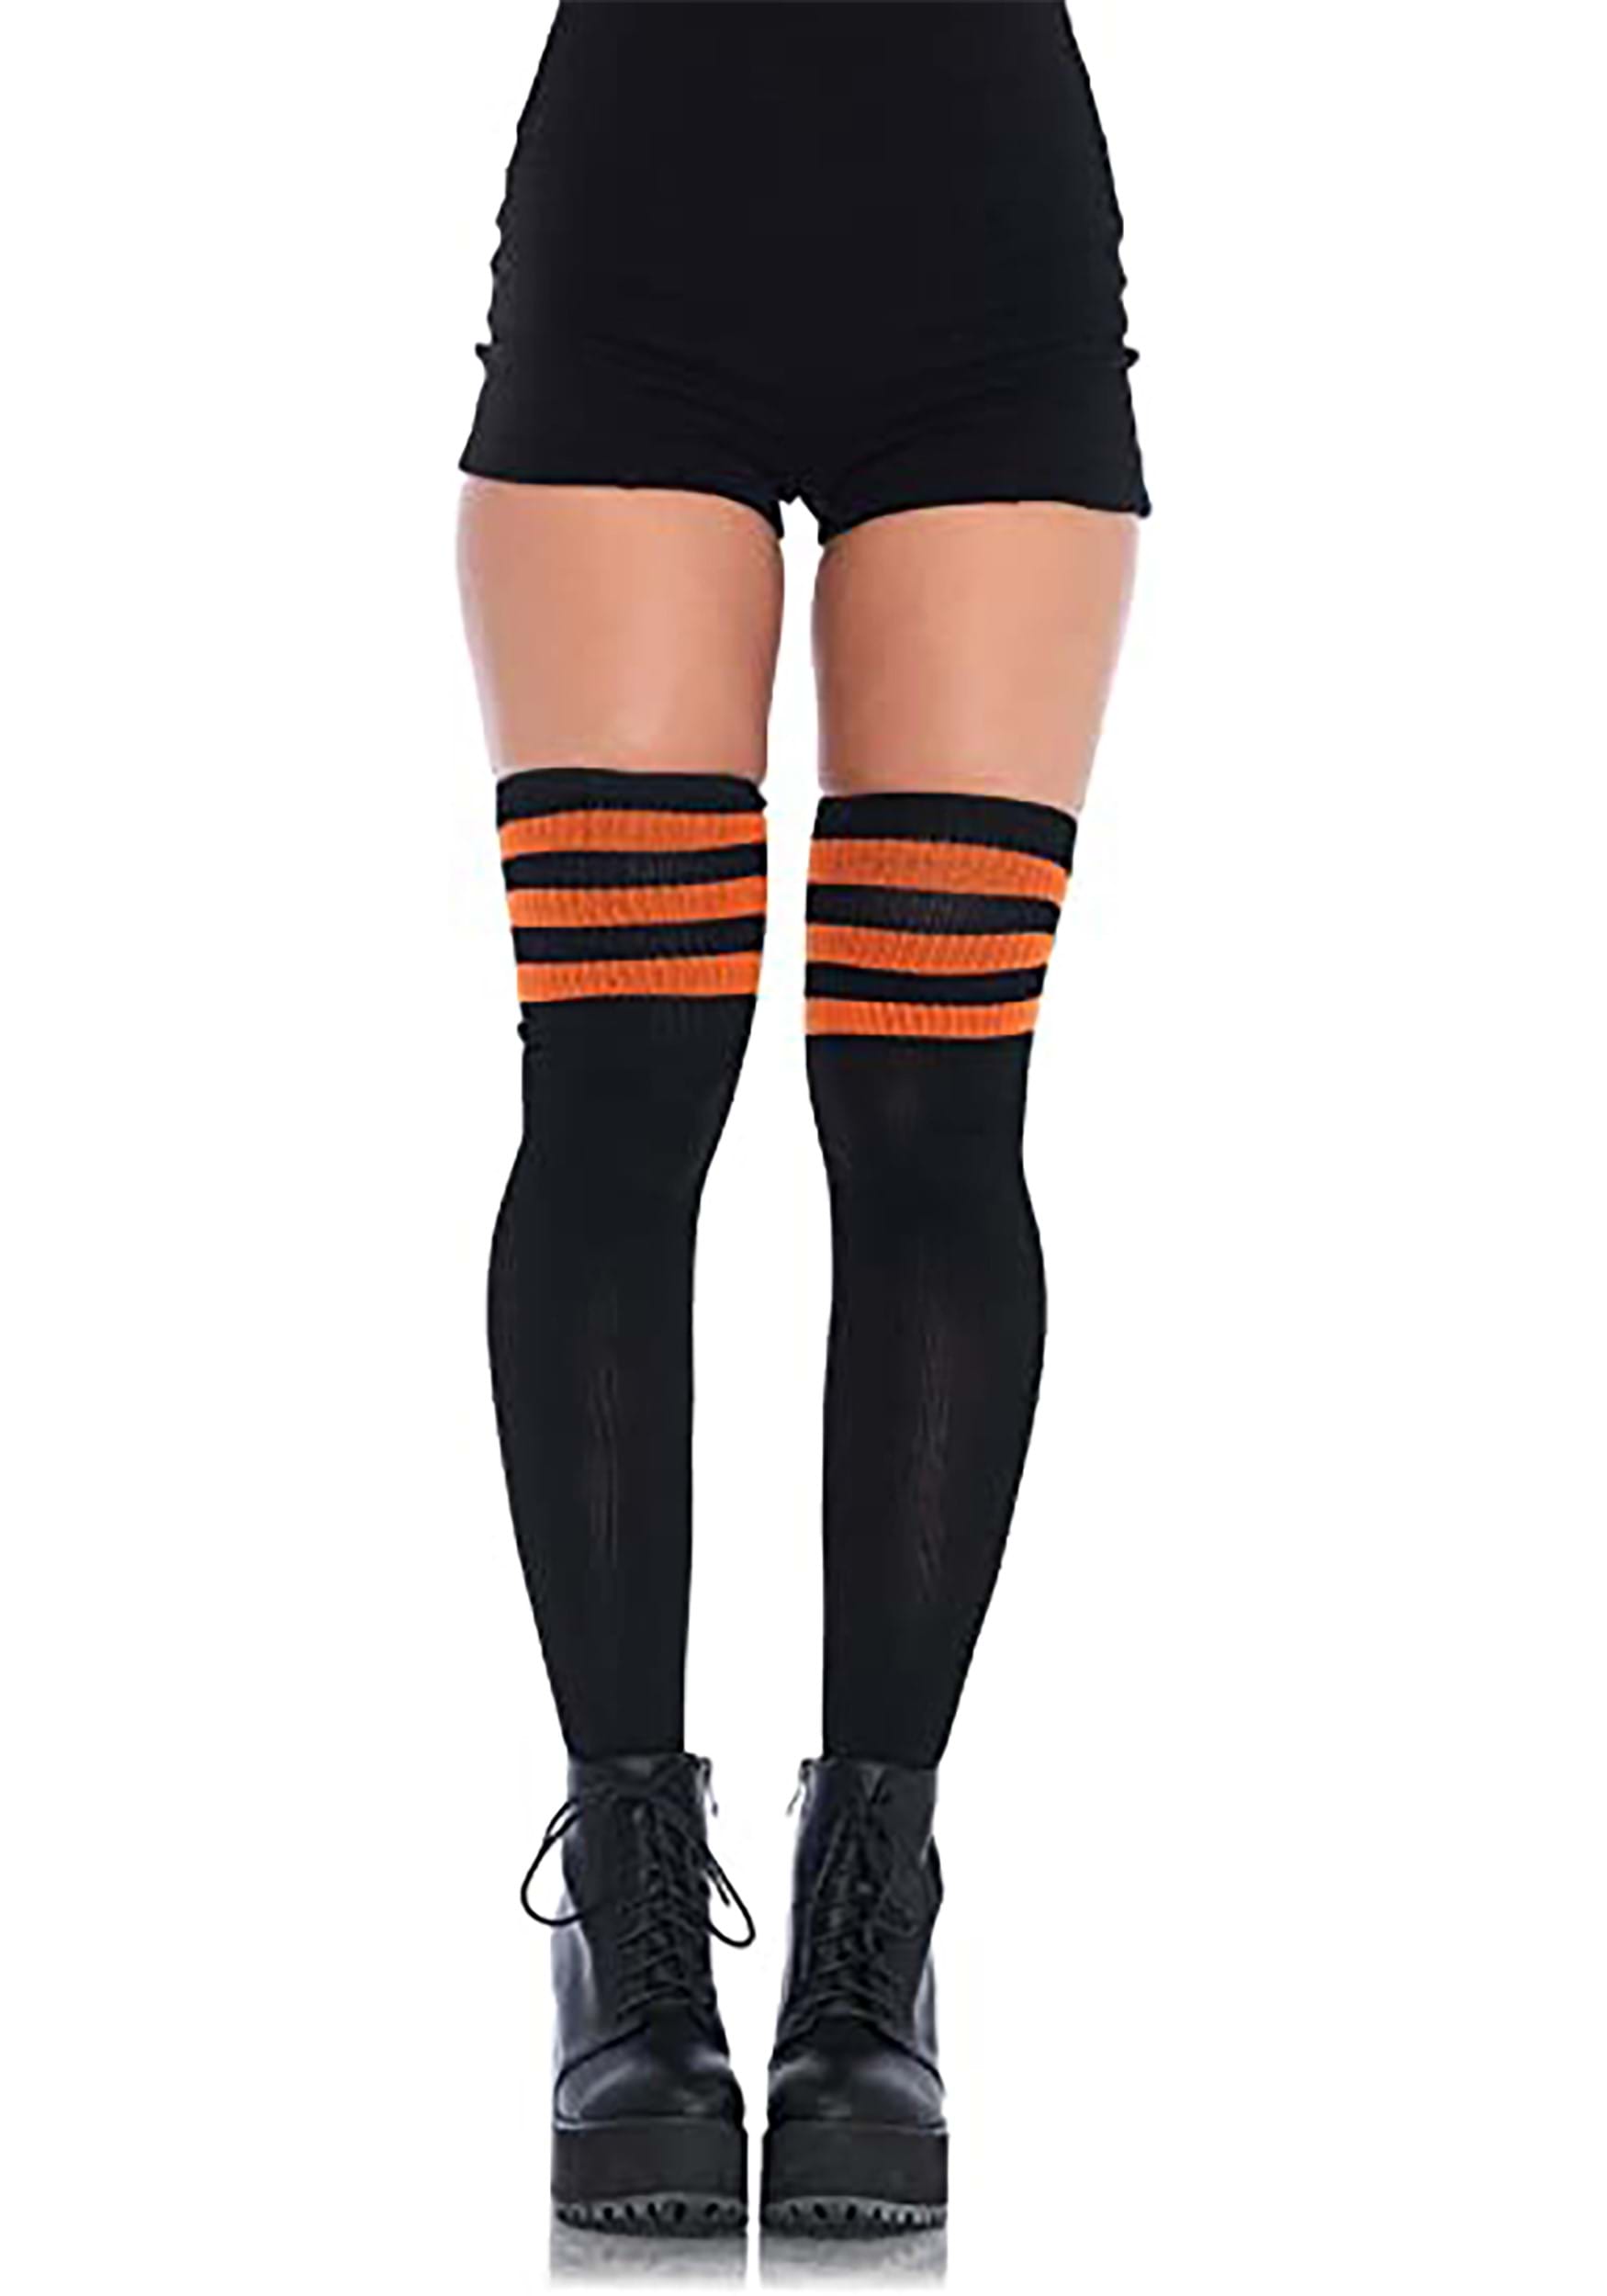 Women's Thigh High Athletic Black Socks with Orange Stripes Thigh